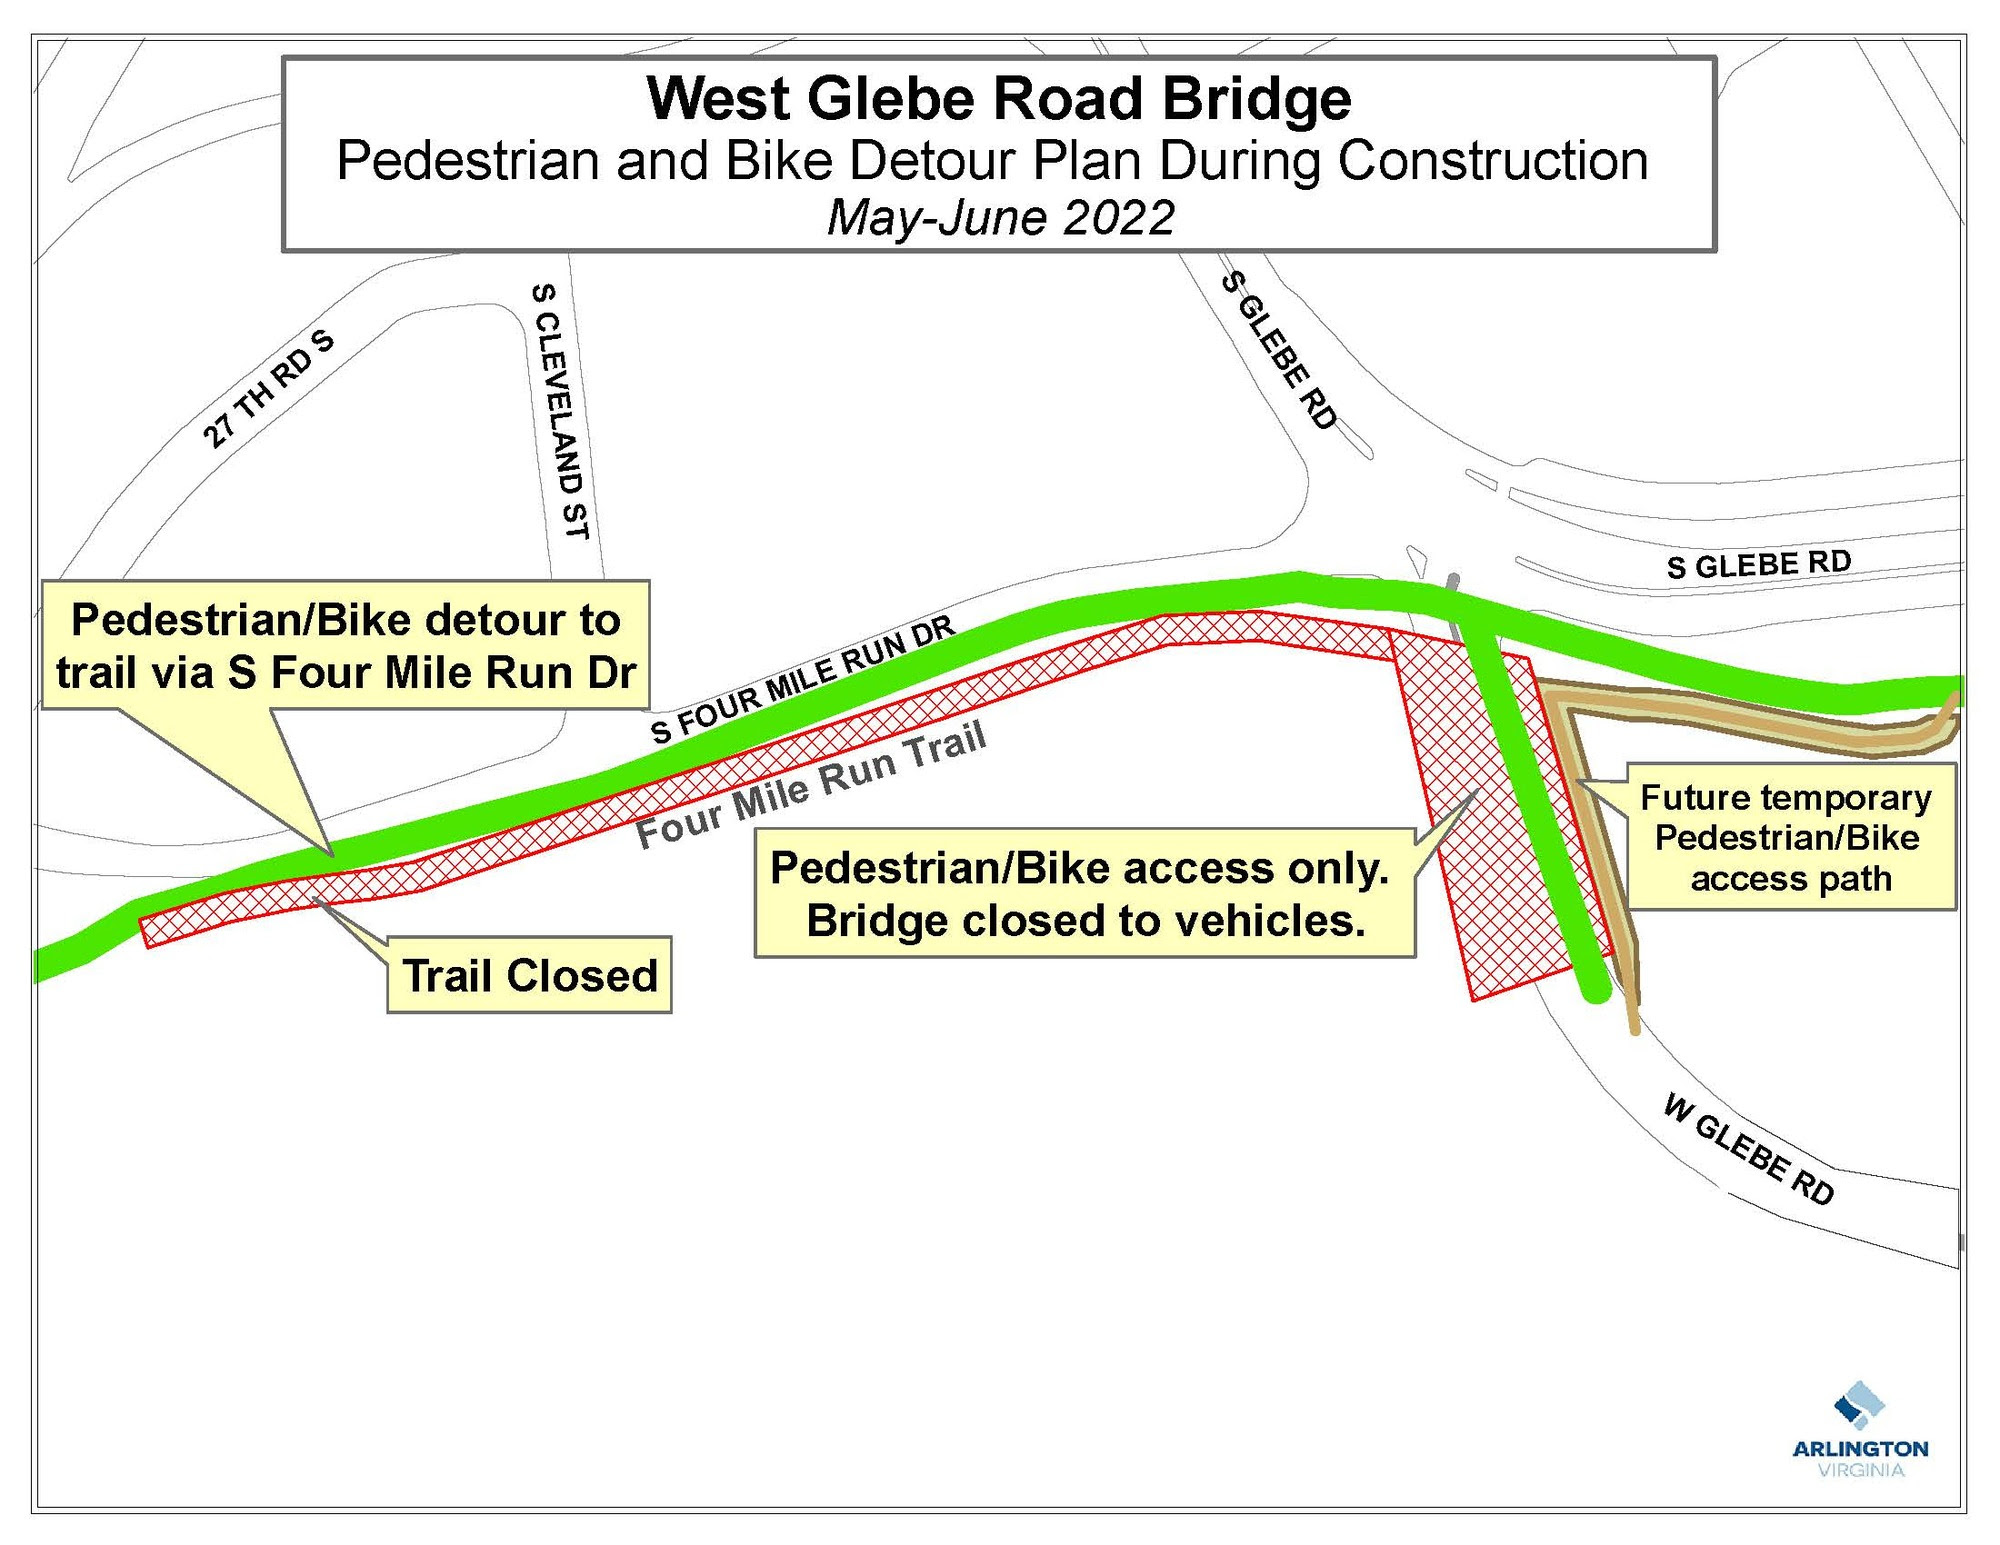 West Glebe Rd Bridge - May-June 2022